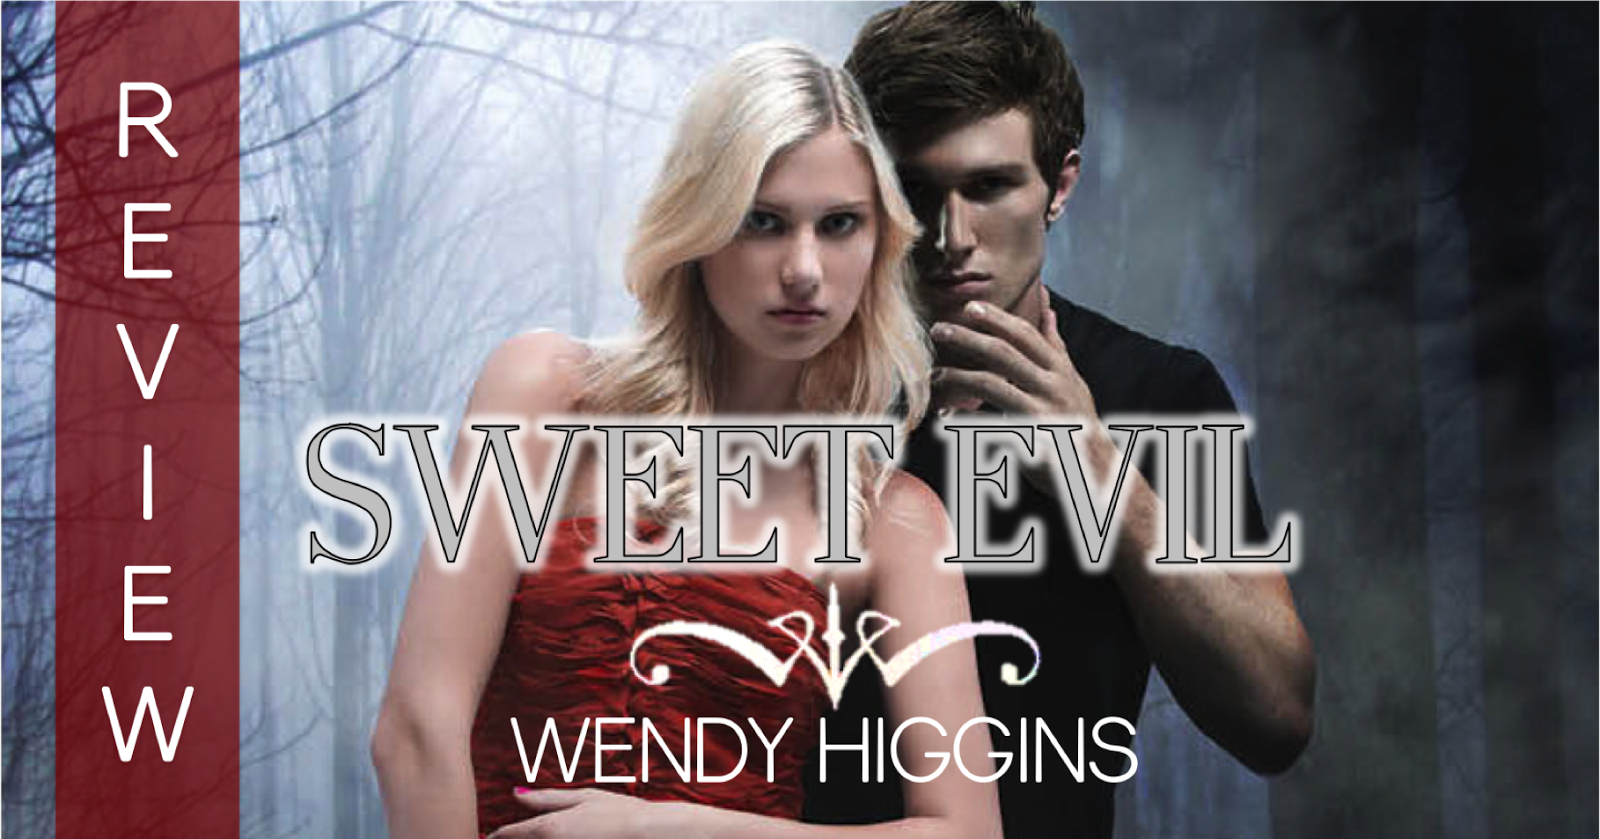 Wendy Higgins - The Sweet Trilogy.zip